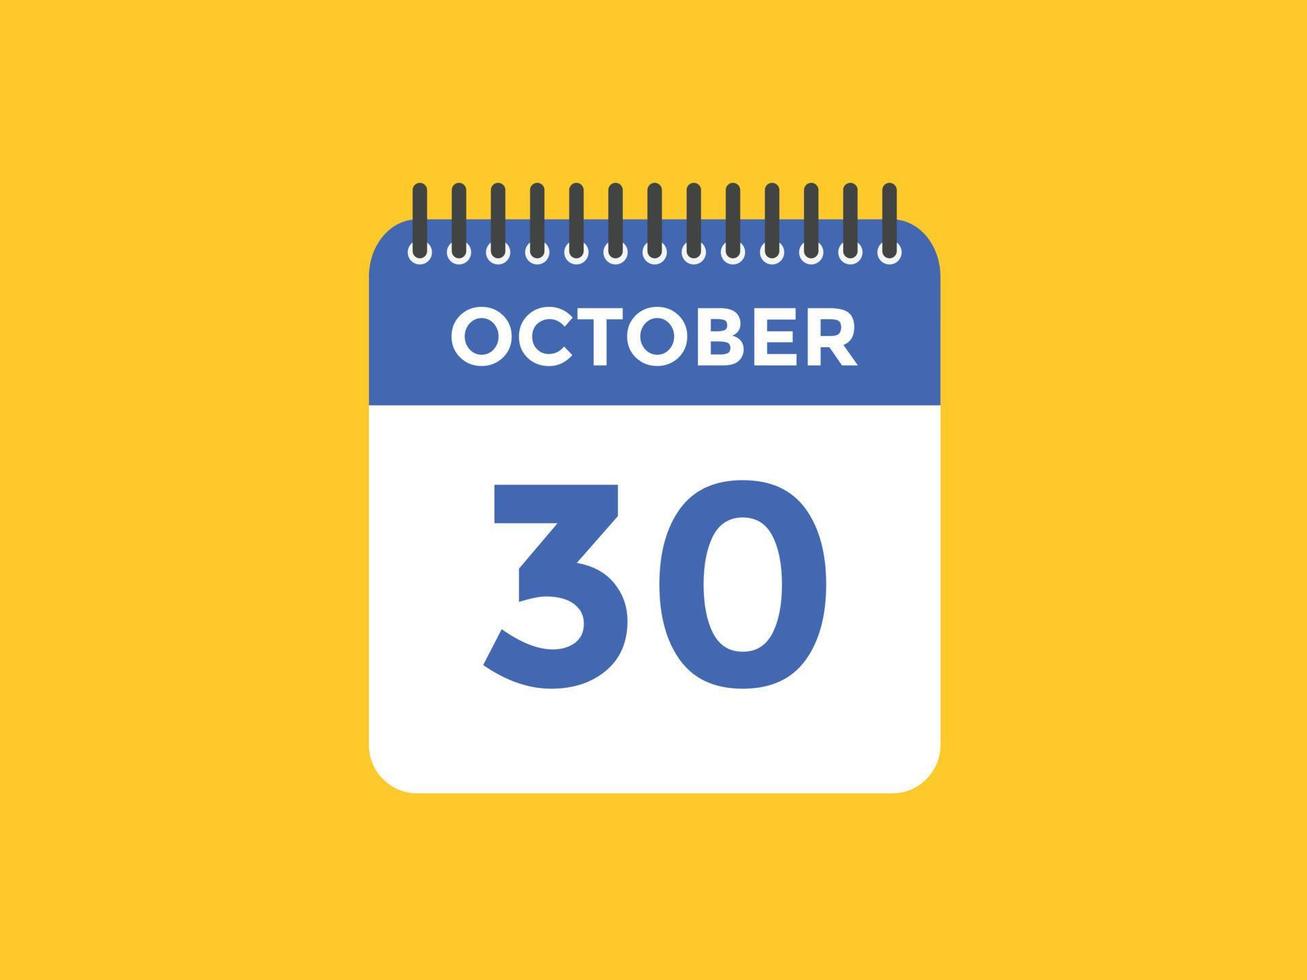 october 30 calendar reminder. 30th october daily calendar icon template. Calendar 30th october icon Design template. Vector illustration